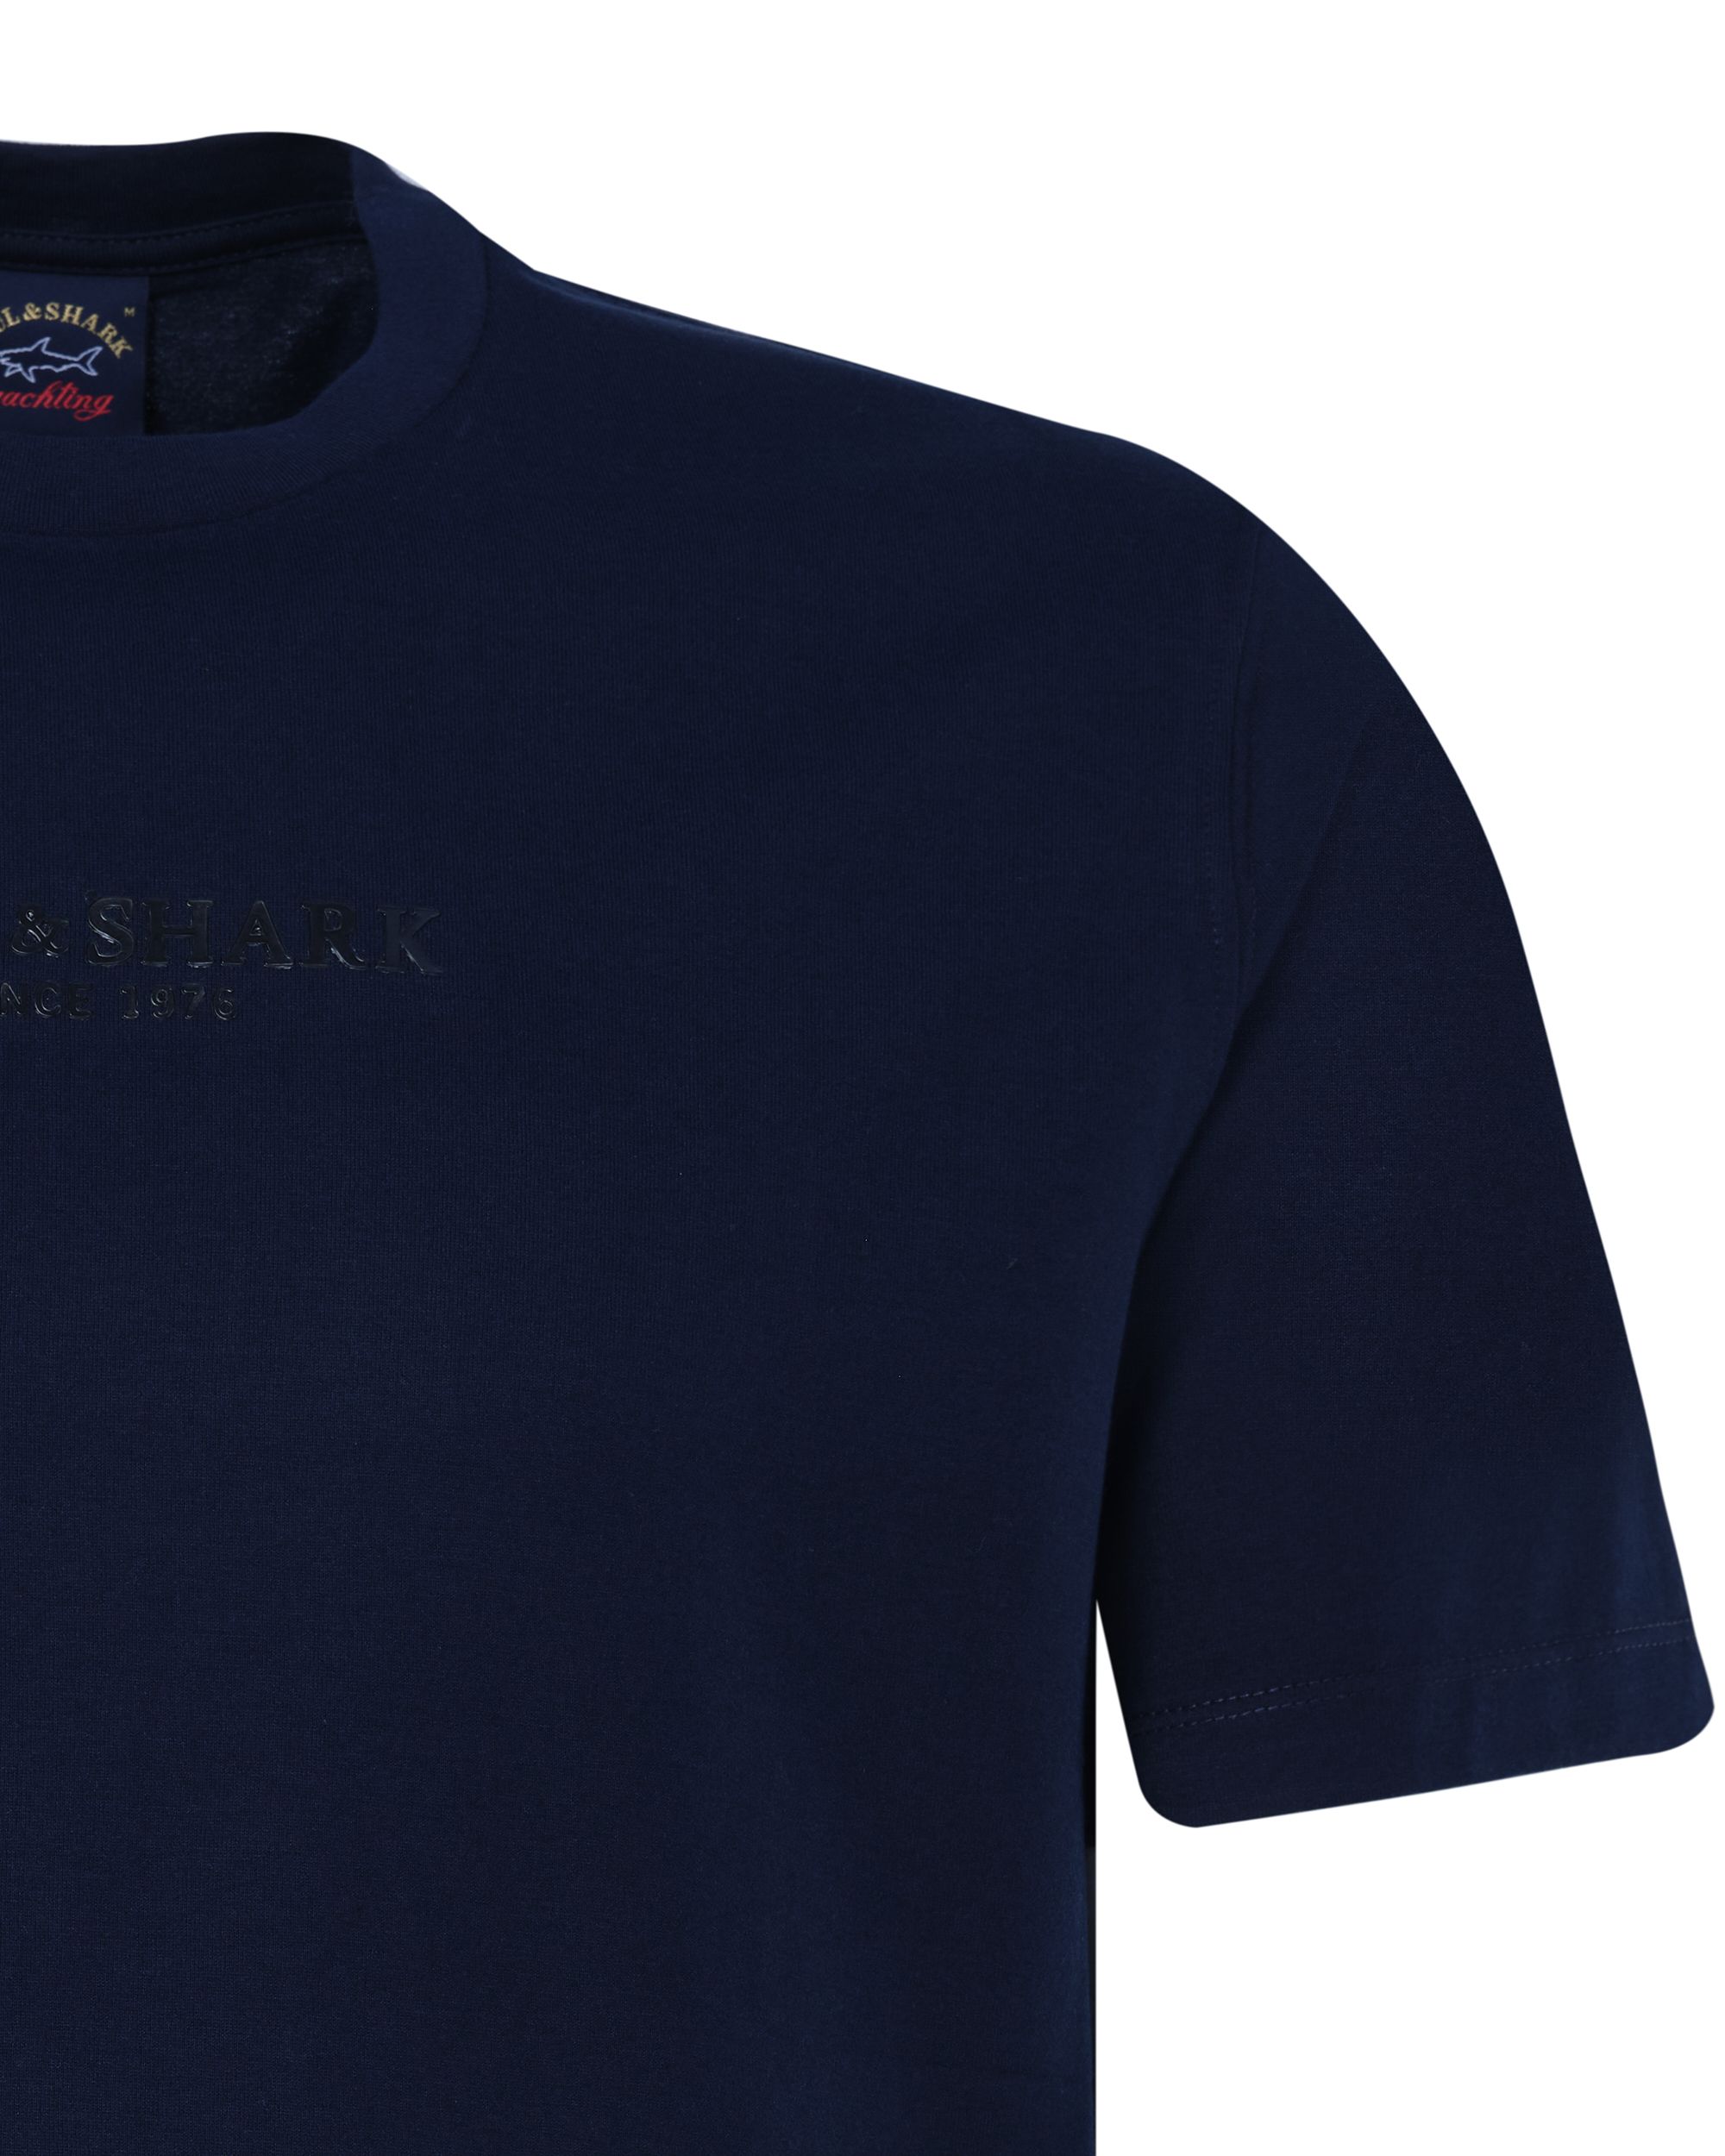 Paul & Shark T-shirt KM Donker blauw 080383-002-L